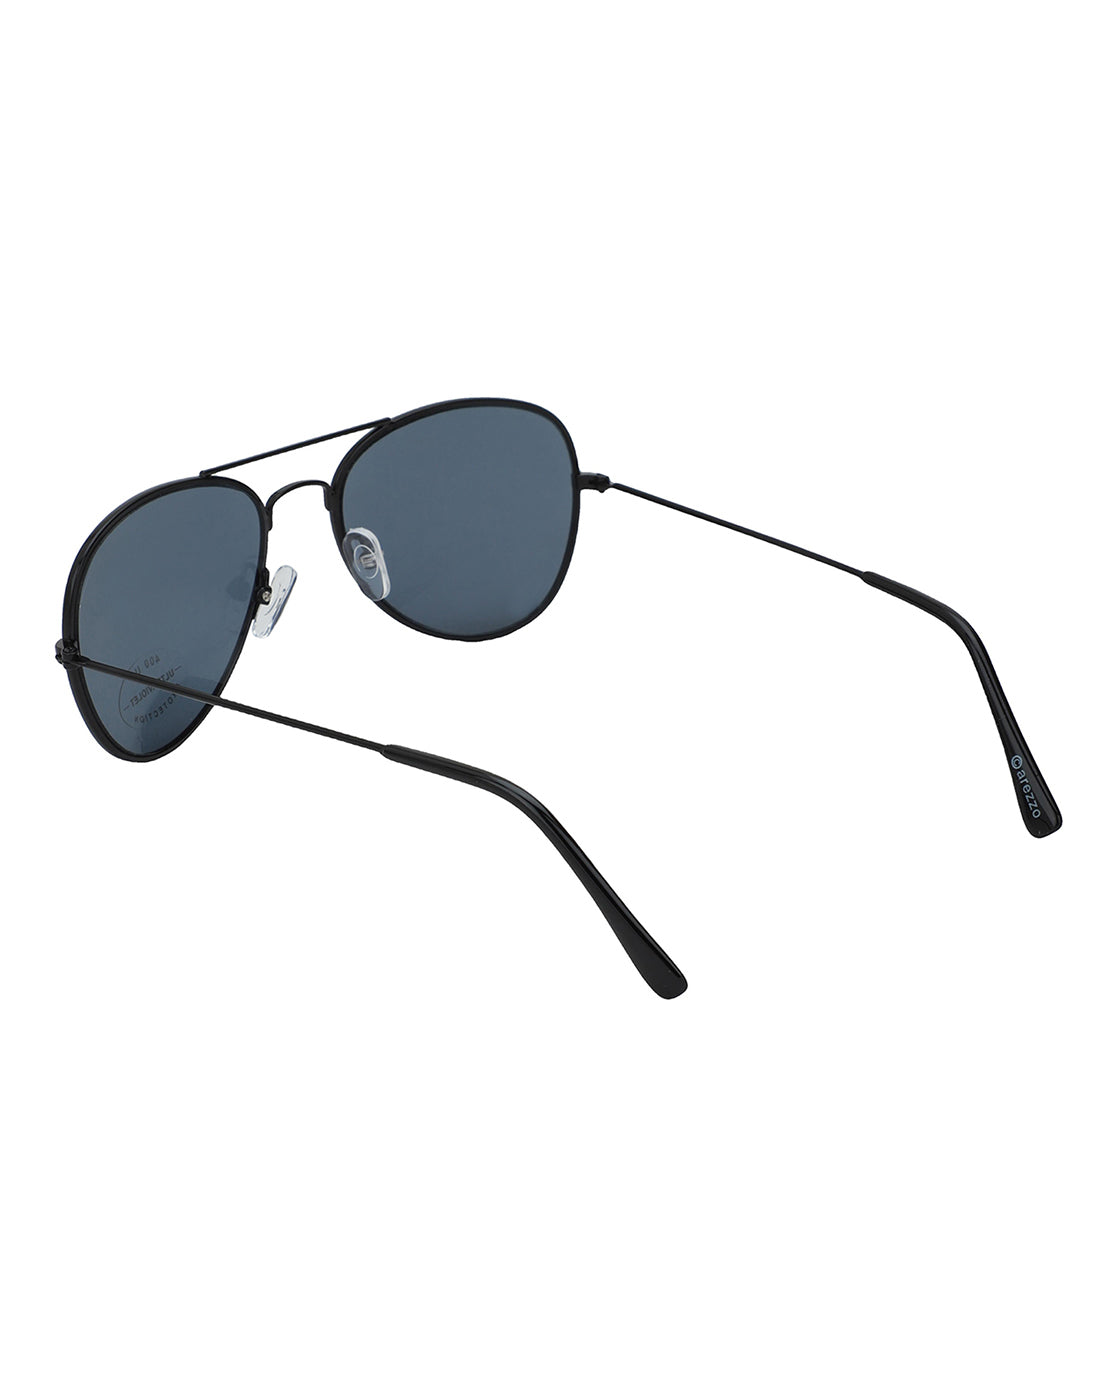 Aviator Sunglasses in Black, Silver + Gunmetal | Eyewear | Uncommon James